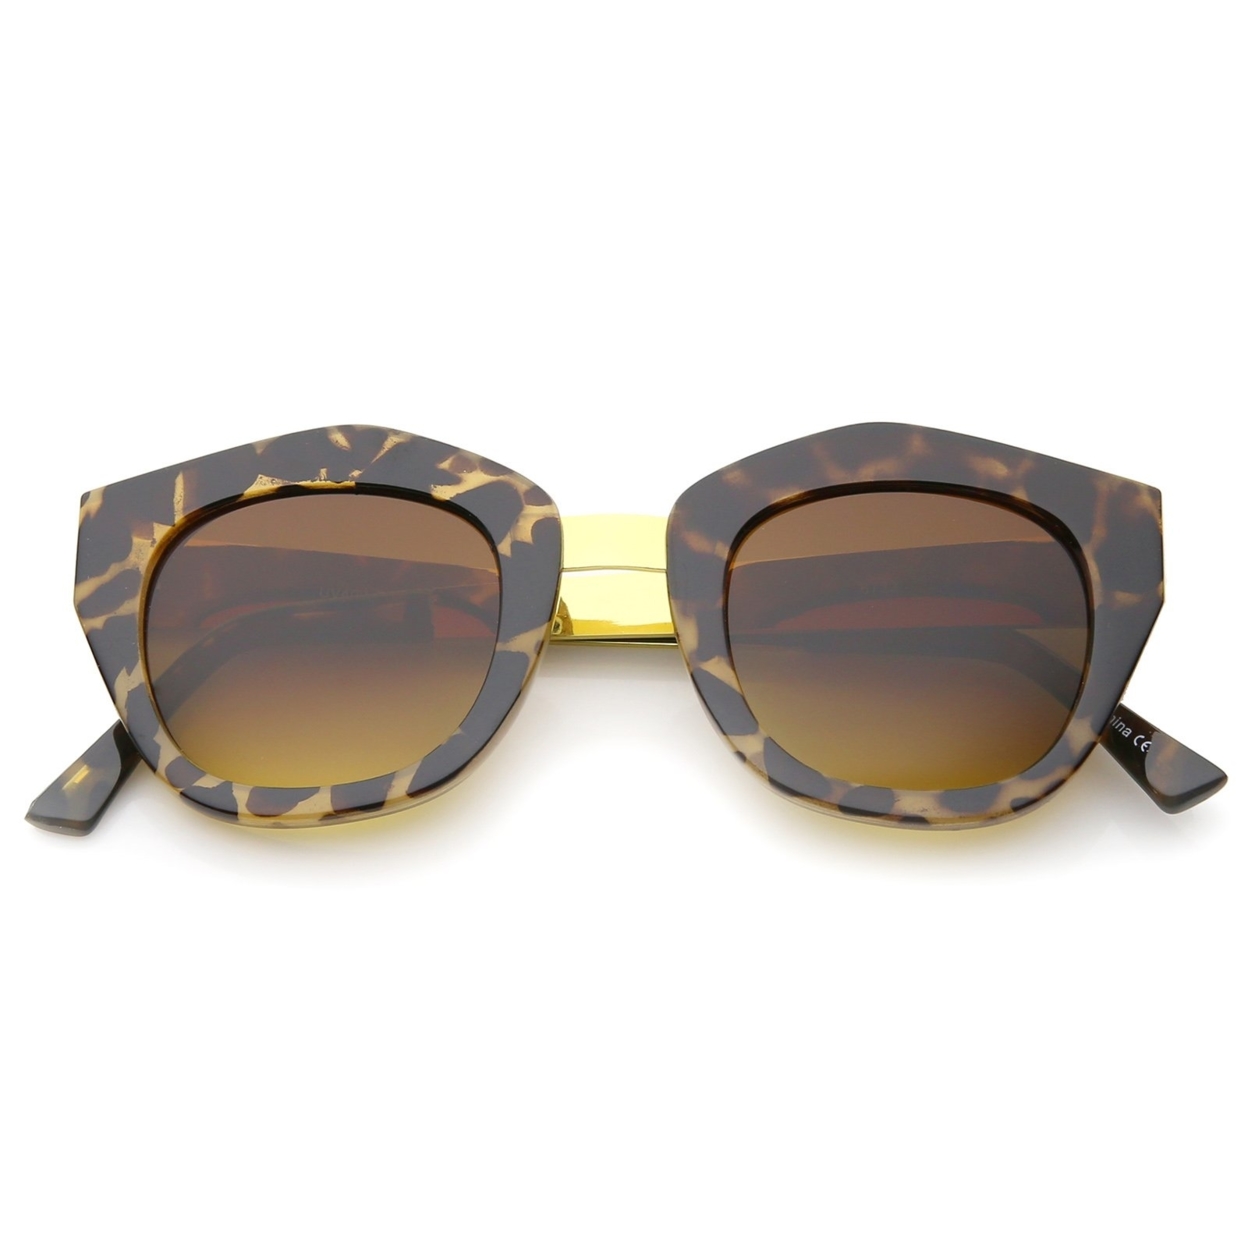 Women's Geometric Metal Bridge And Temple Square Lens Cat Eye Sunglasses 46mm - Tortoise / Amber